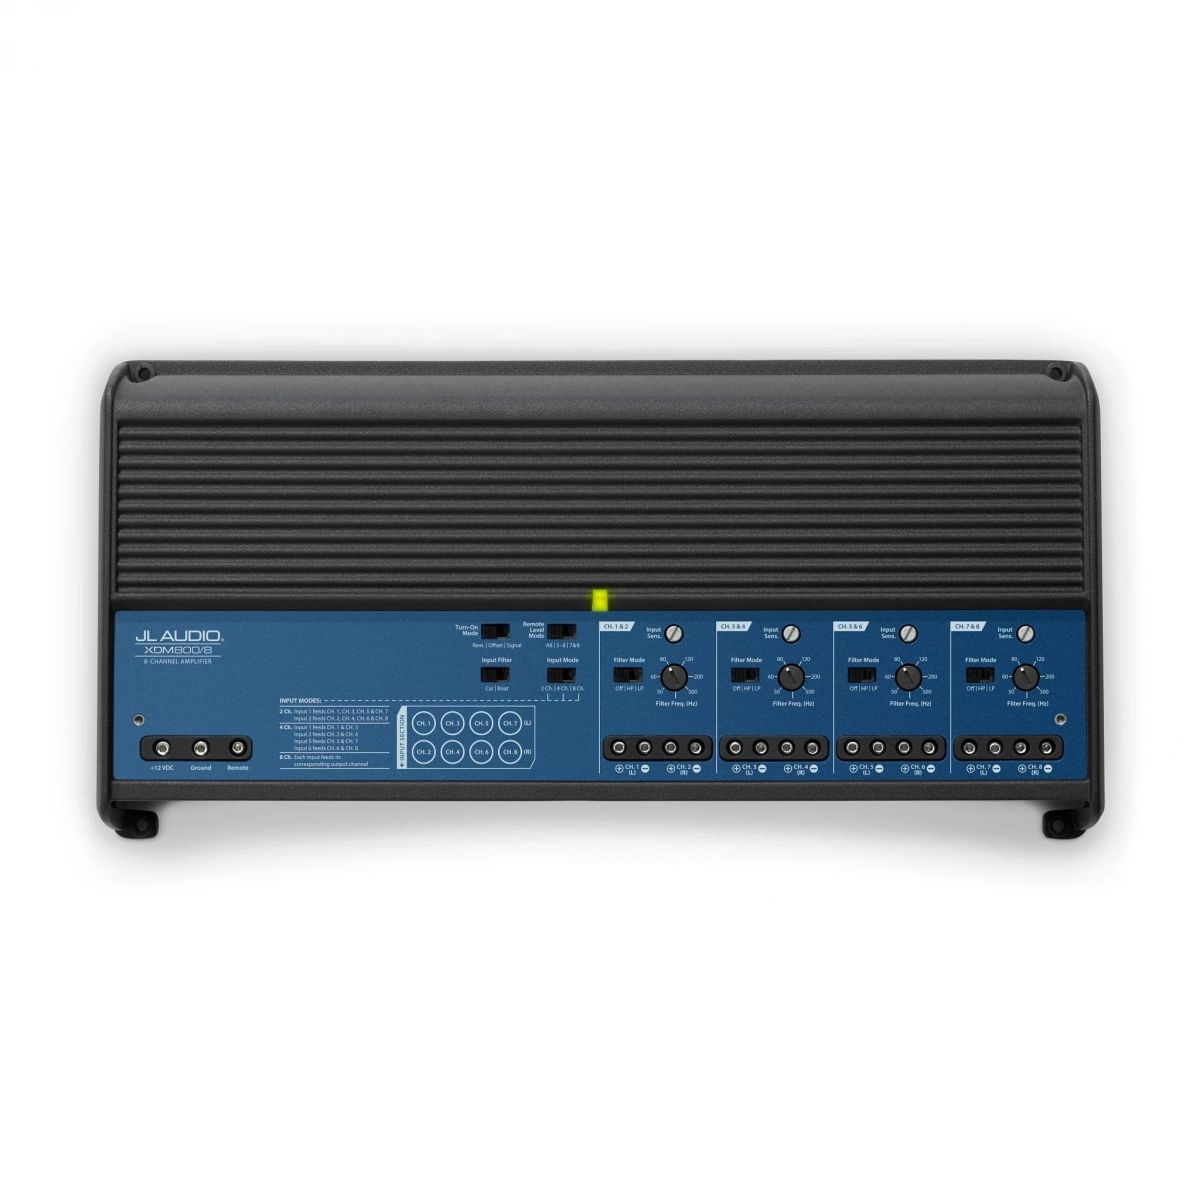 JL audio XDM800/8 marine pojačalo 12V 800W 8 kanalno